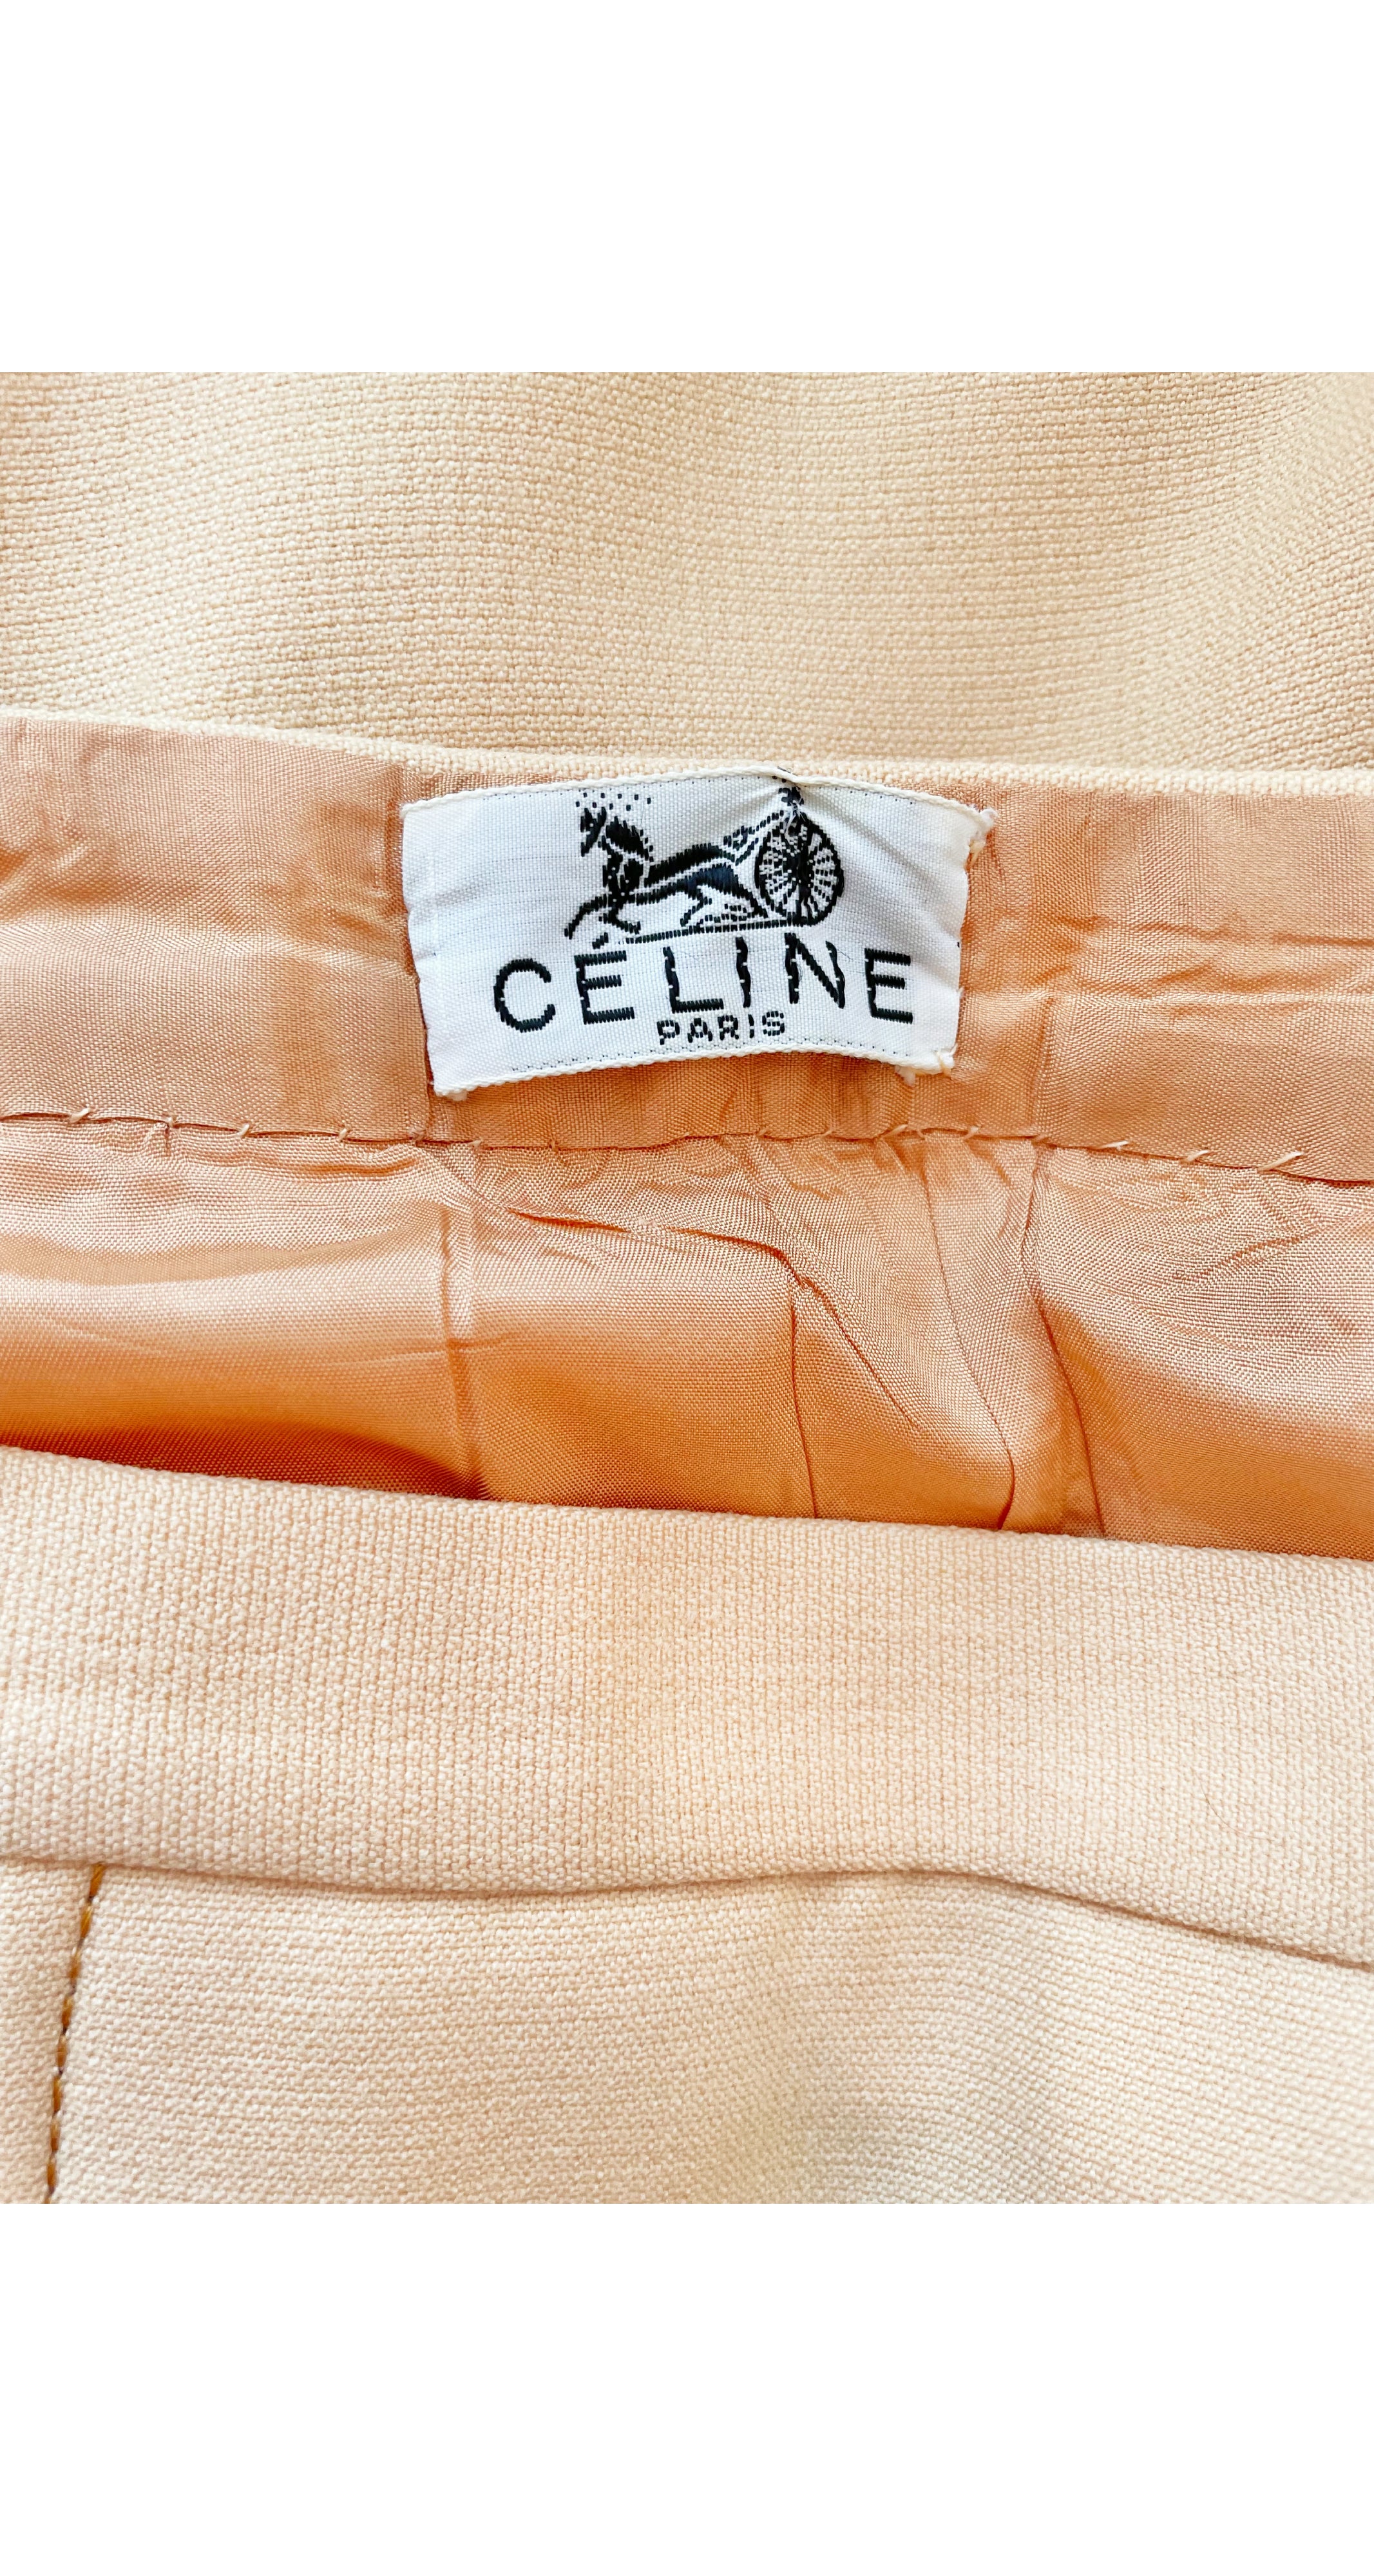 1970s Tan Wool Box Pleated Knee-Length Skirt